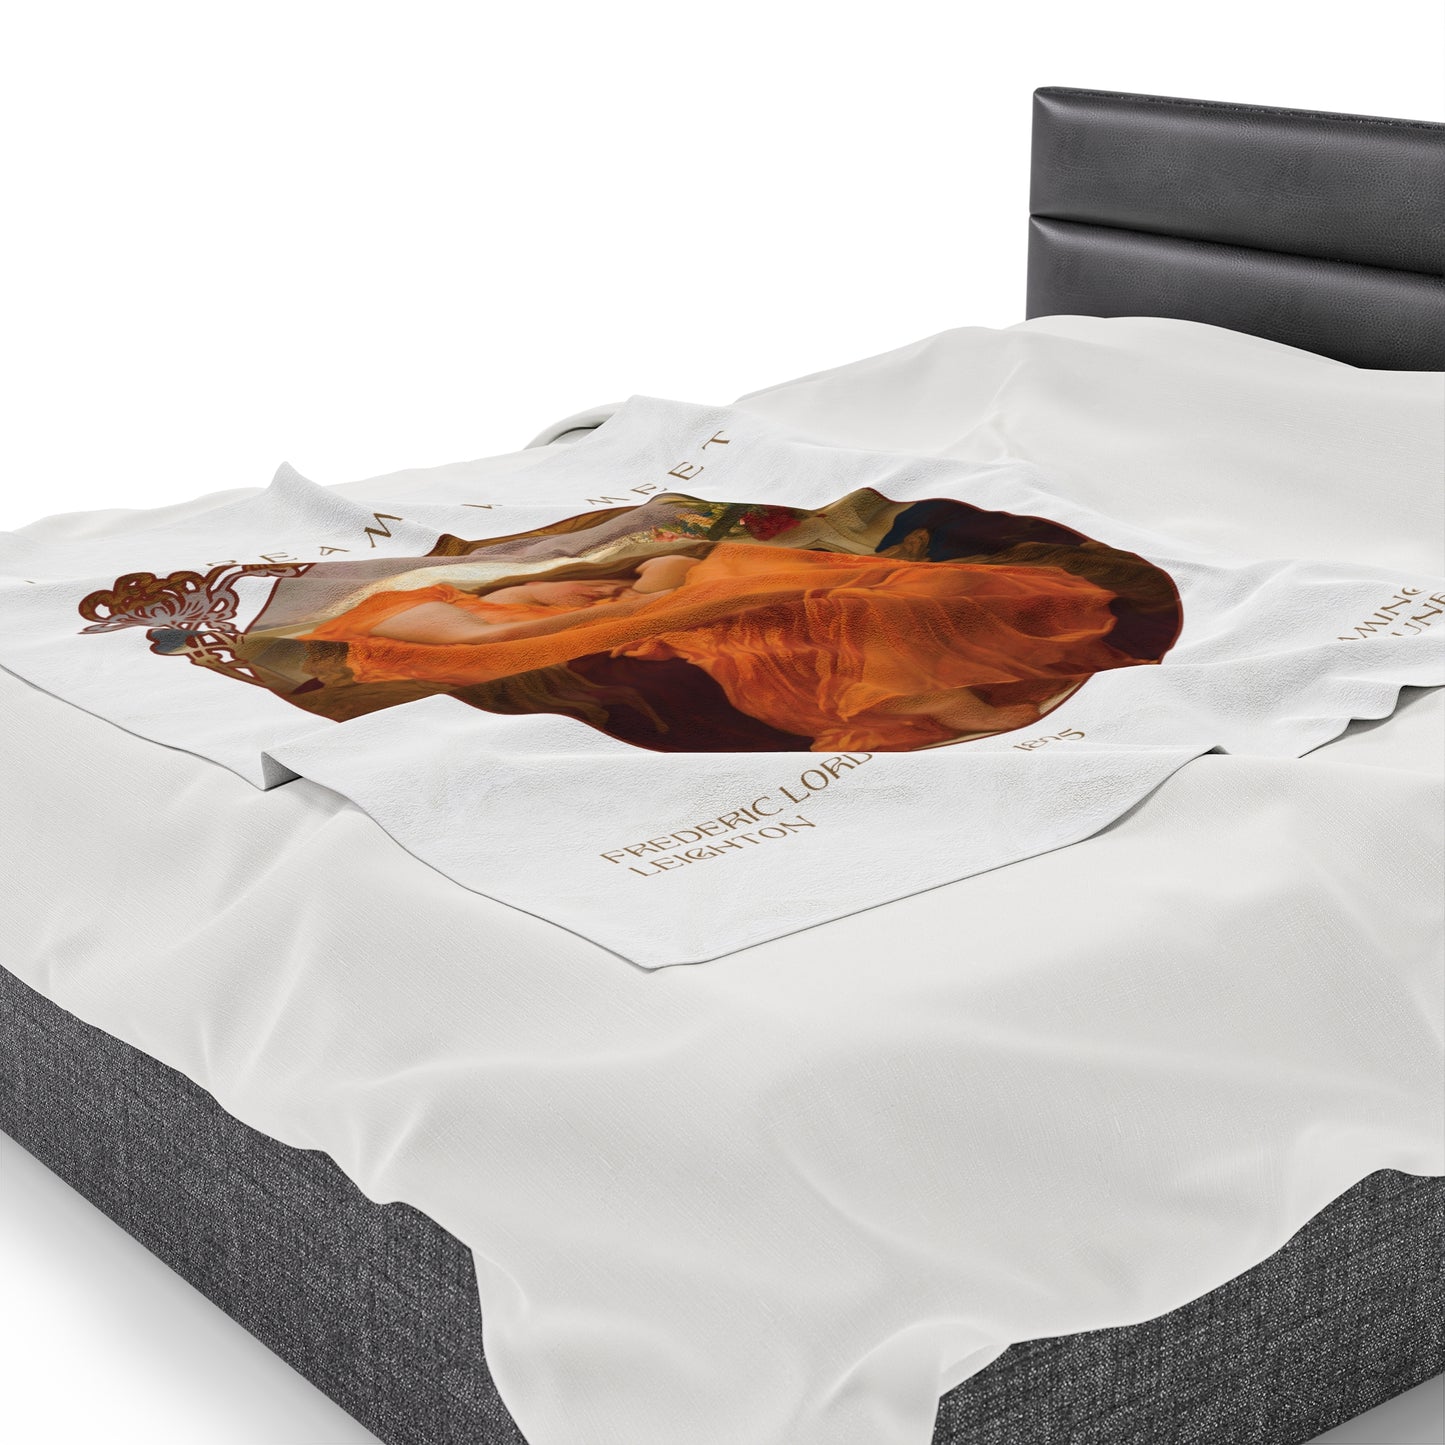 Exclusive 'Flaming June' Design - Velveteen Plush Blanket